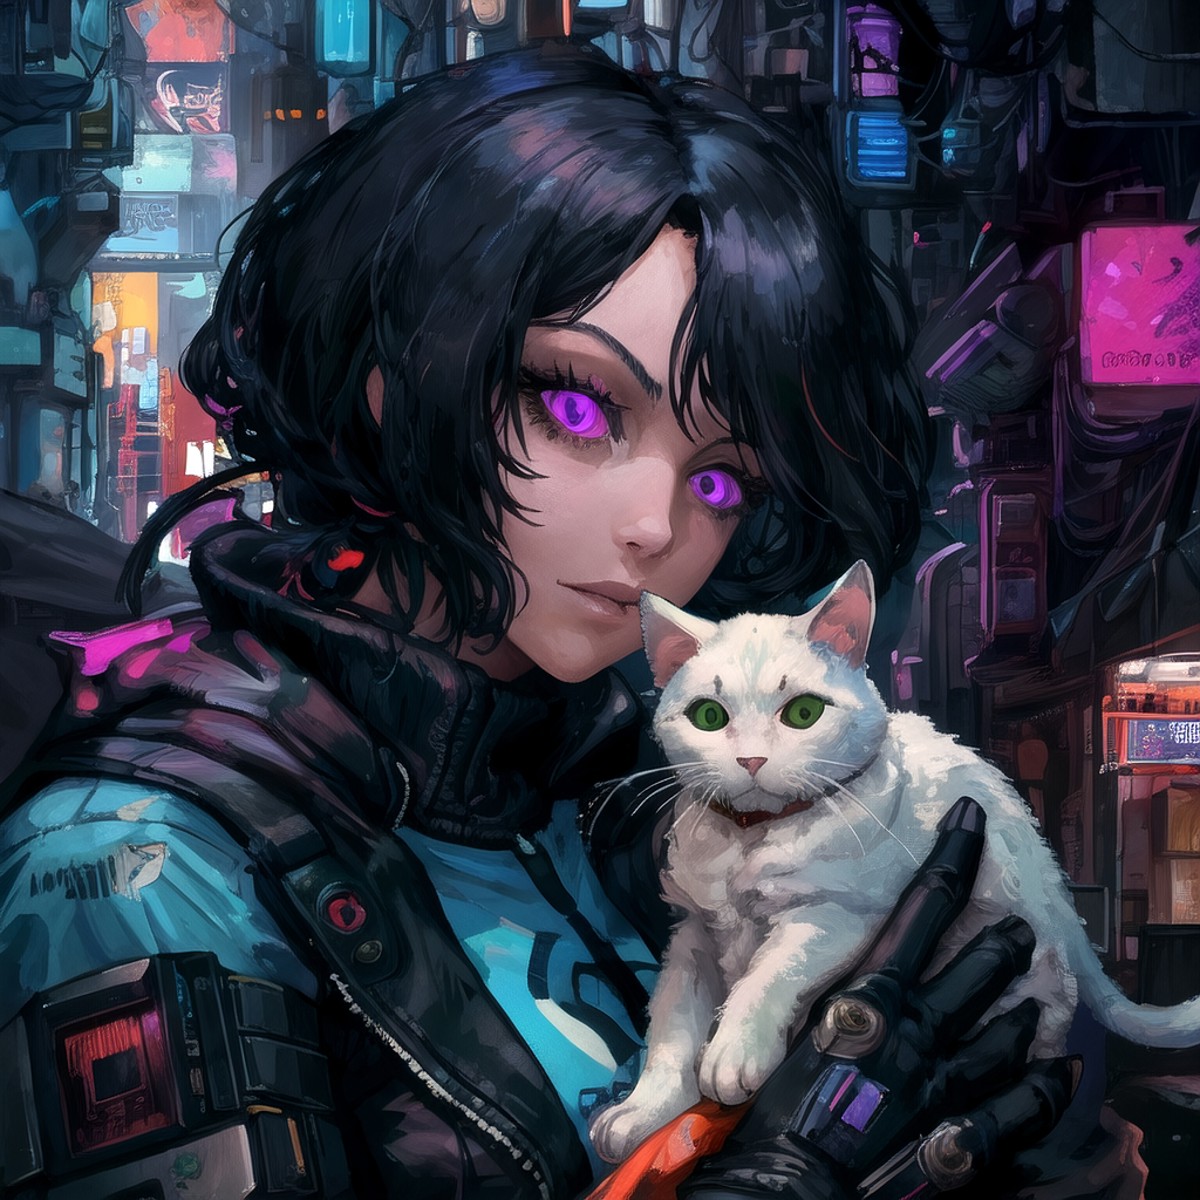 close-up, a girl holding a cat, midnight, cyberpunk city, masterpiece